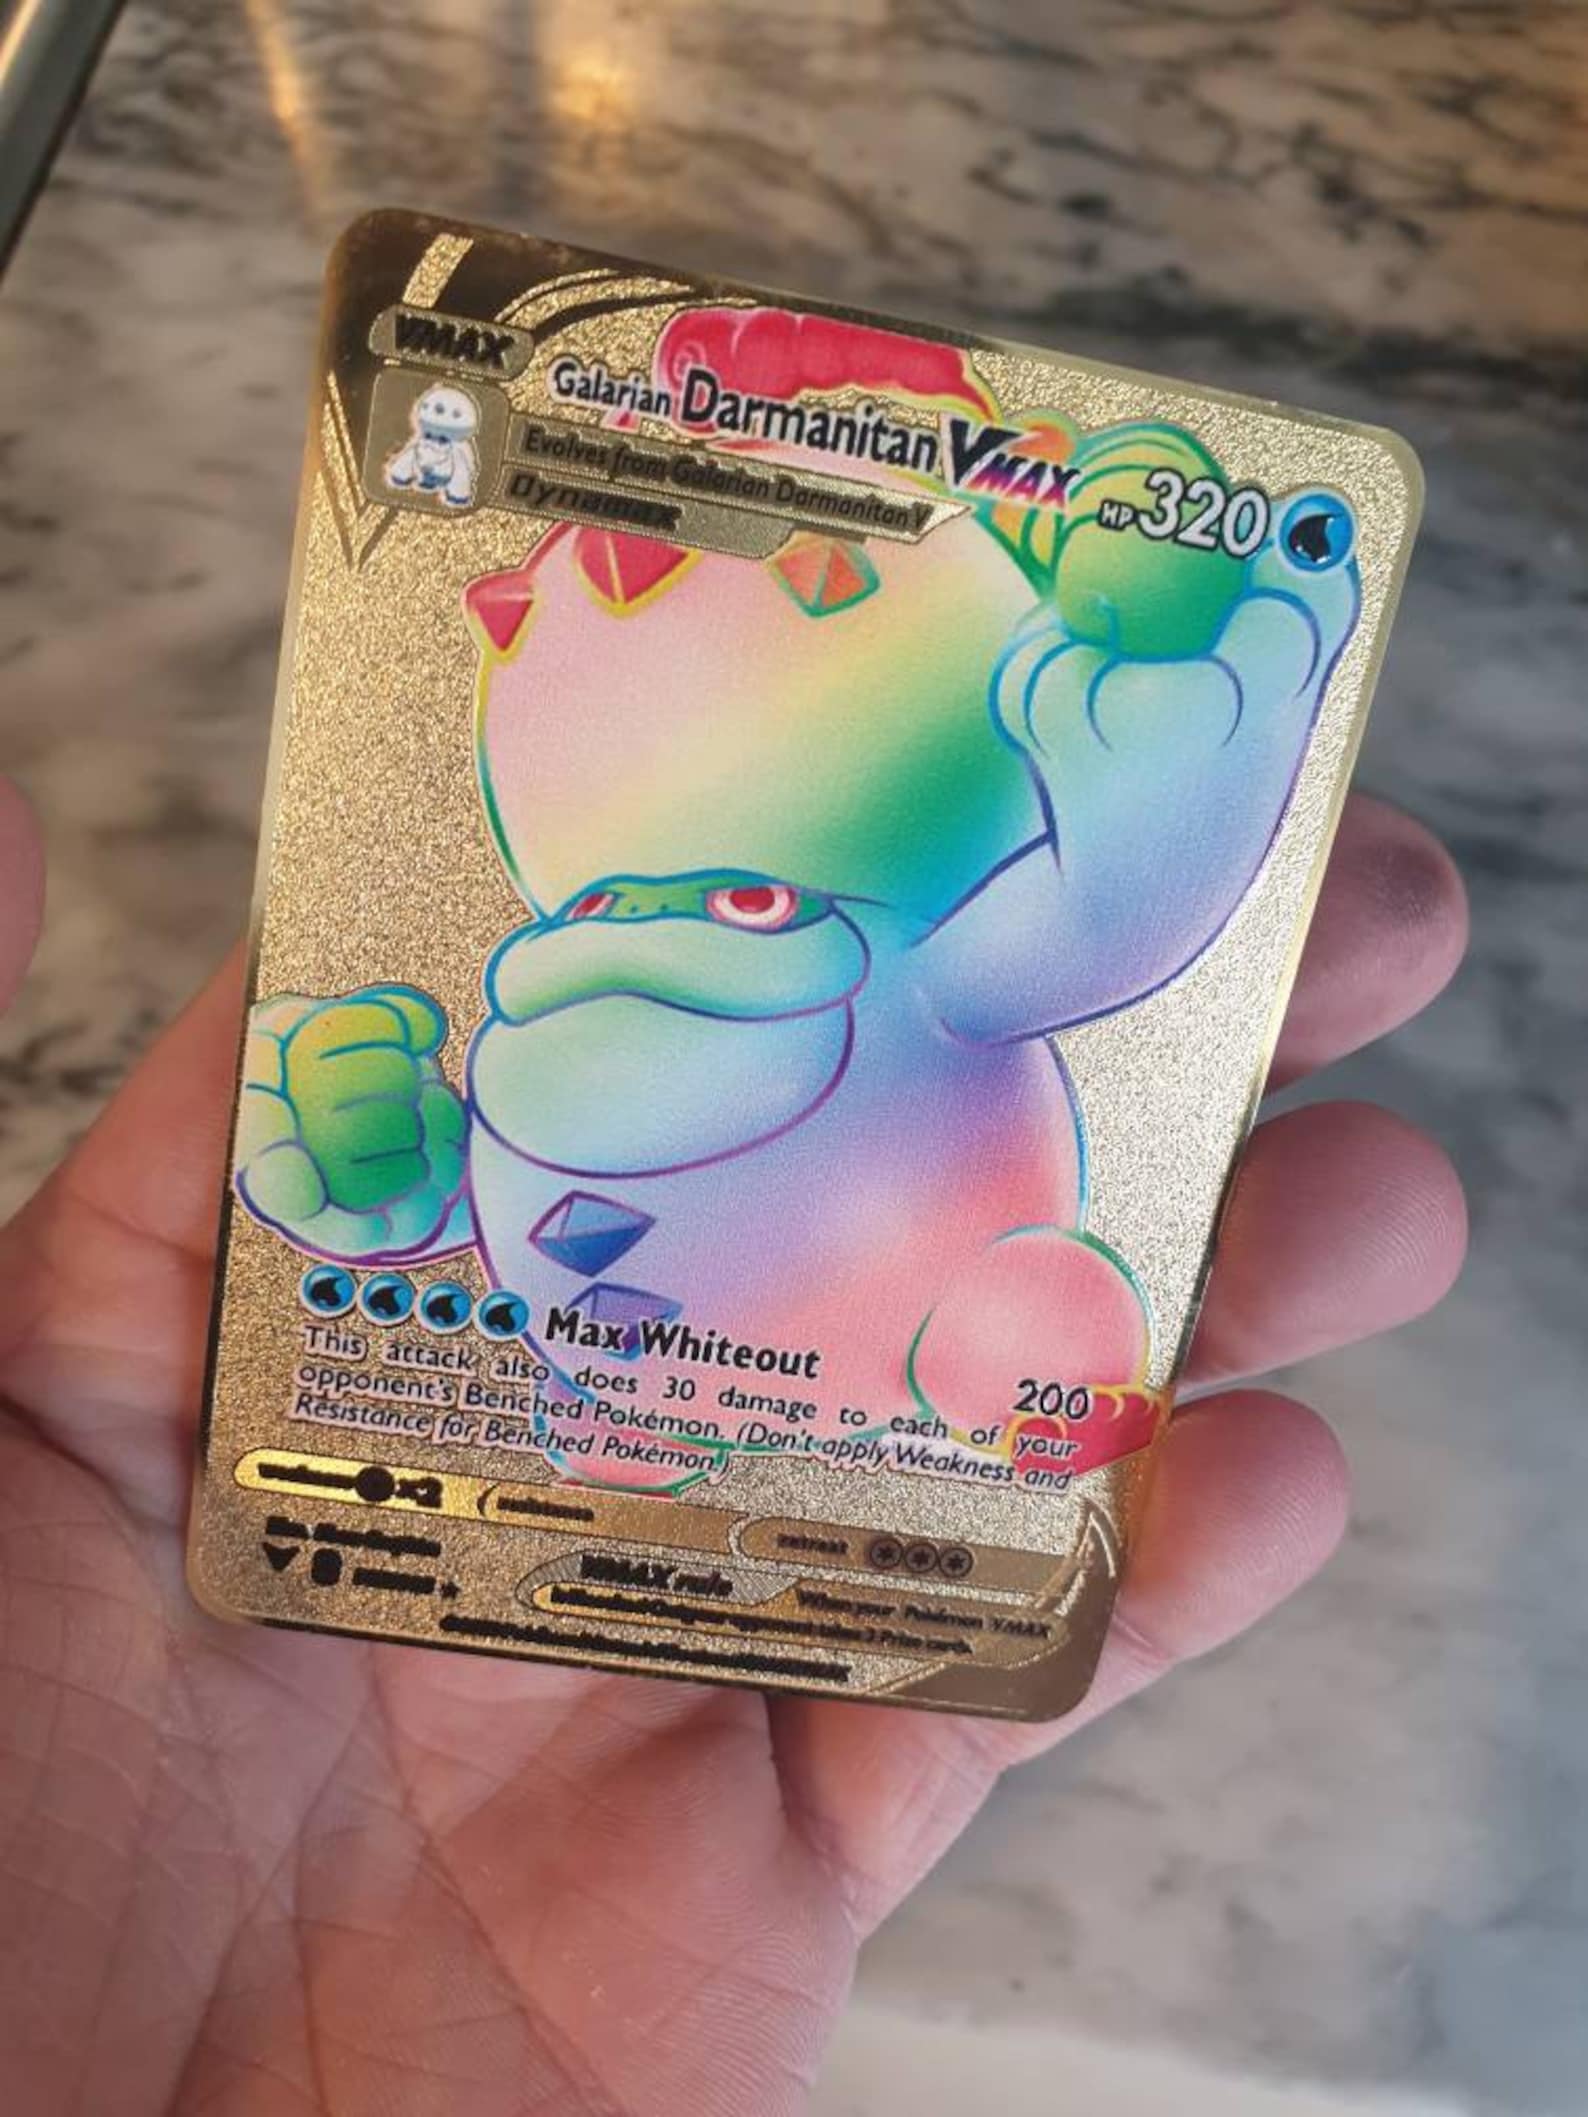 GOLD Rainbow Darmanitan Vmax Pokemon Card Secret Ultra Rare | Etsy